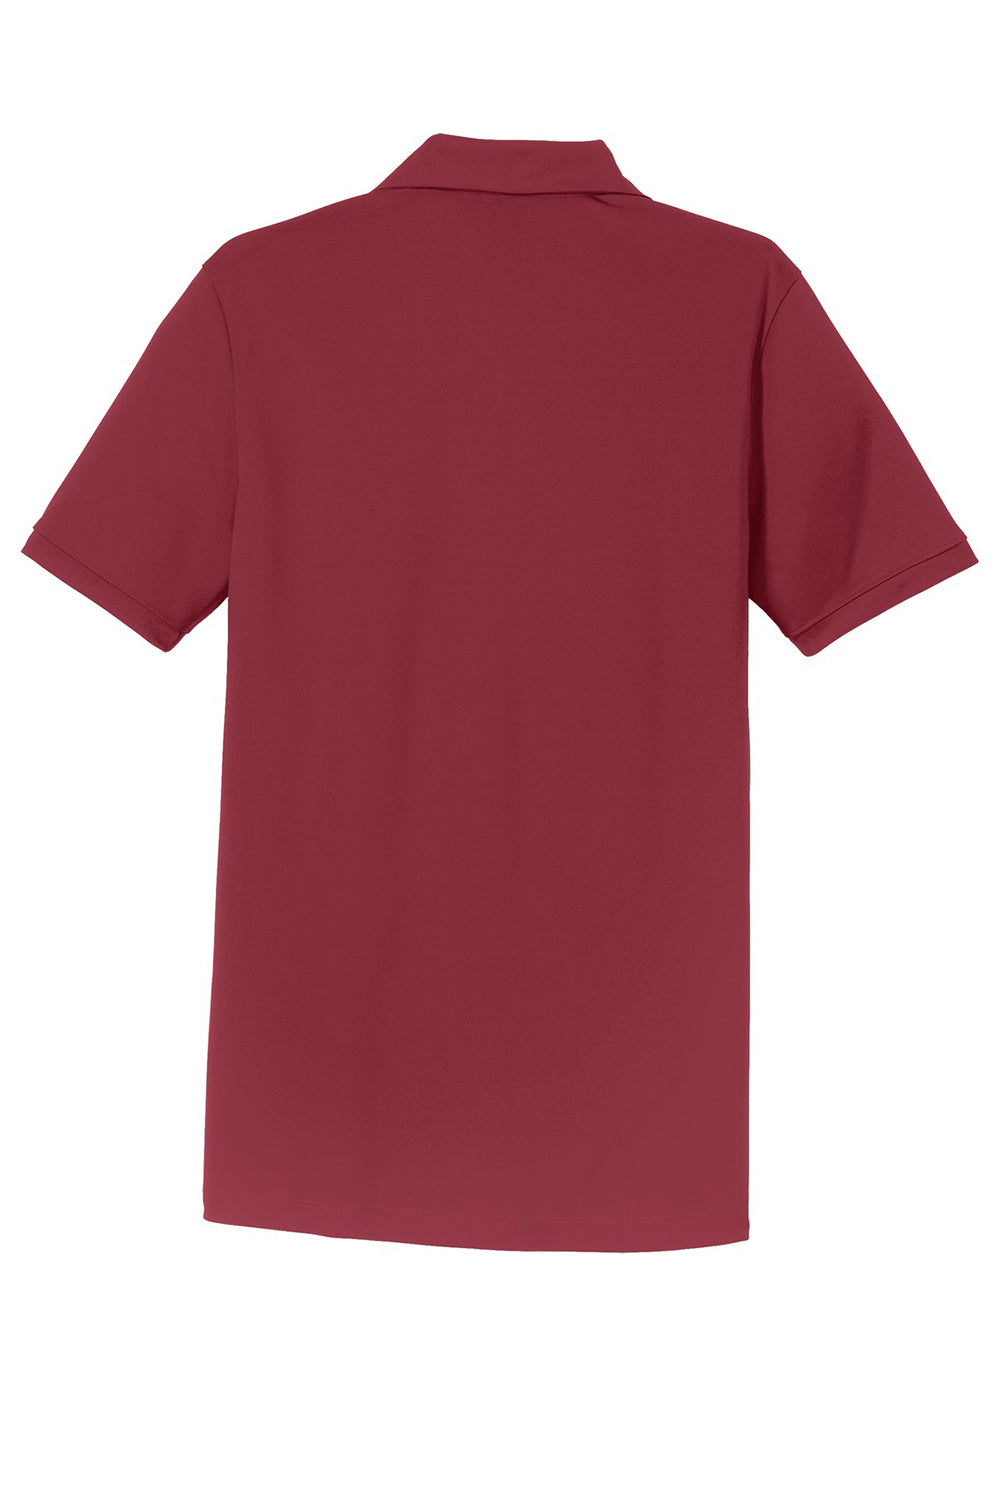 Nike 799802 Mens Players Dri-Fit Moisture Wicking Short Sleeve Polo Shirt Team Red Flat Back